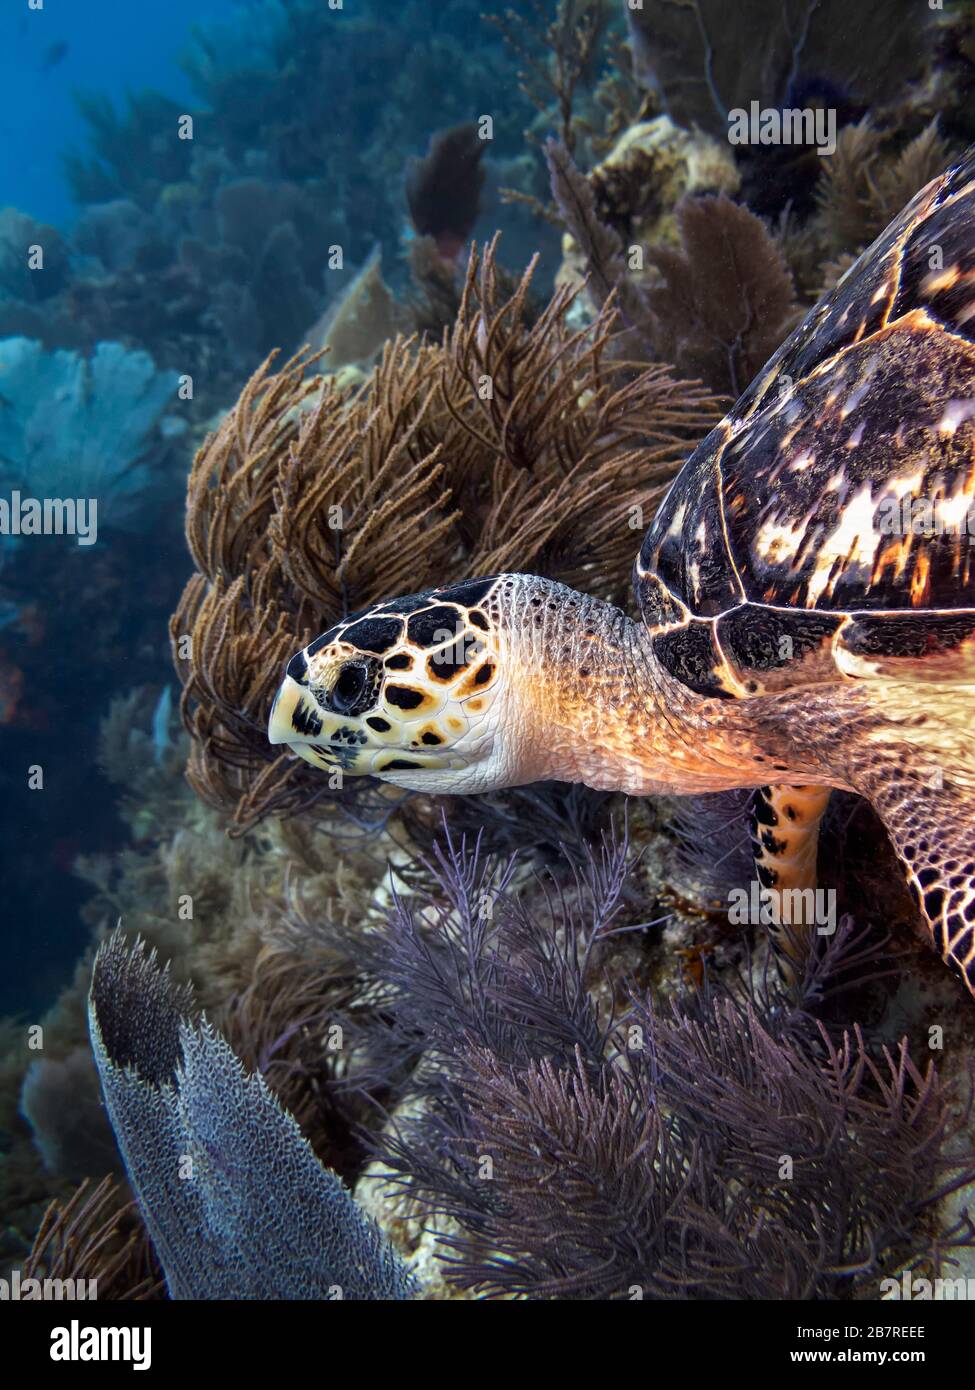 Hawksbill sea turtle (Eretmochelys imbricata) on a coral reef, rare animal in its natural habitat, Florida Keys, United States, Atlantic Ocean, color Stock Photo